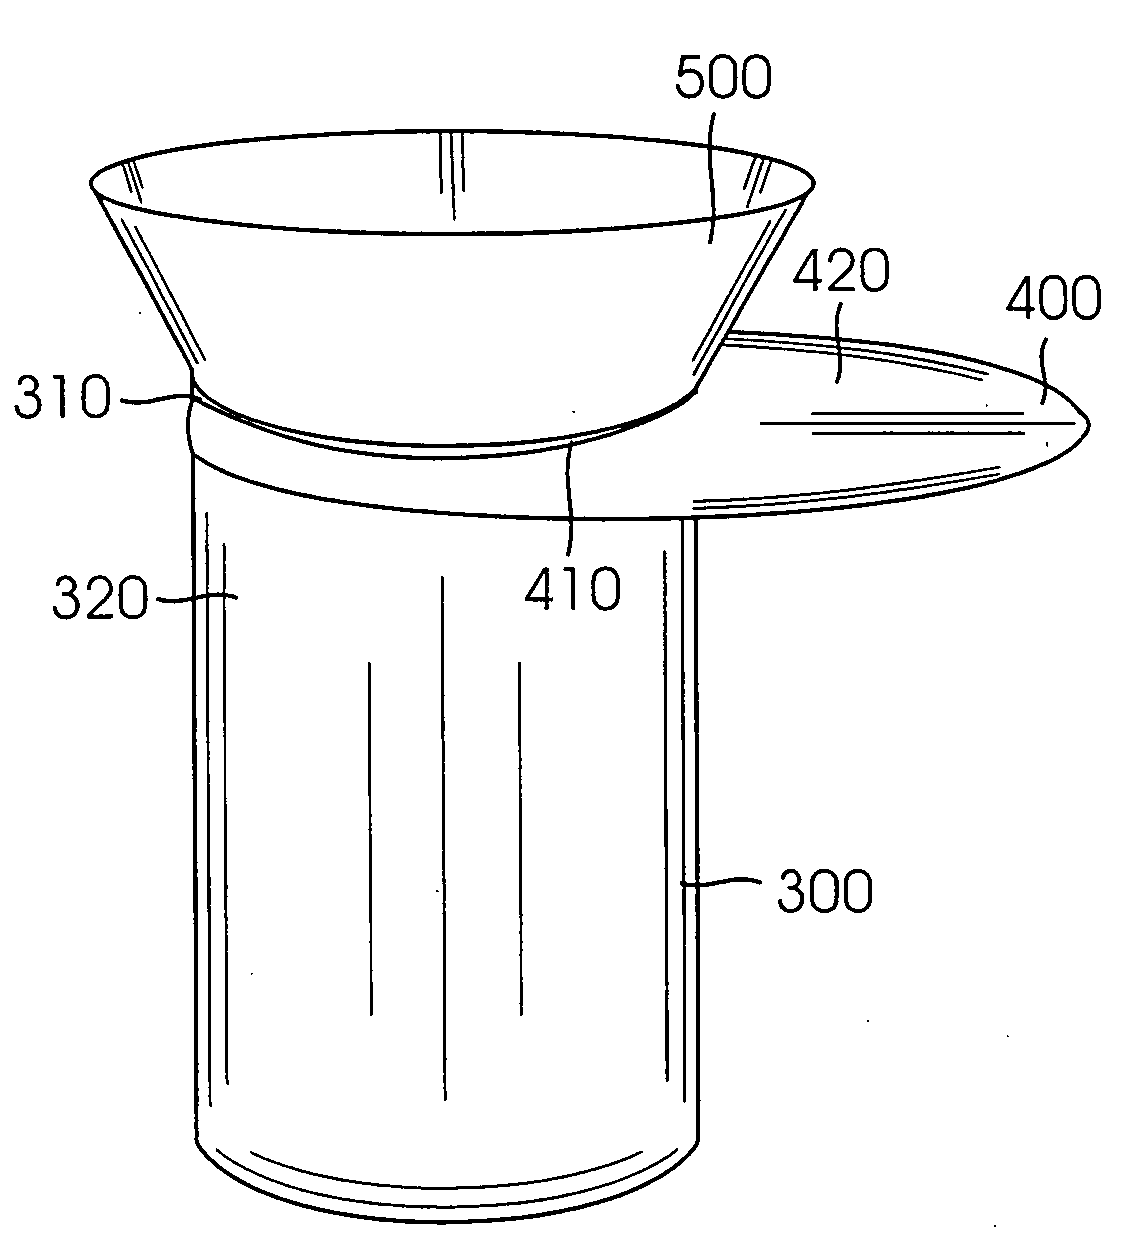 Apparatus for manually retaining a urine cup while providing a urine specimen